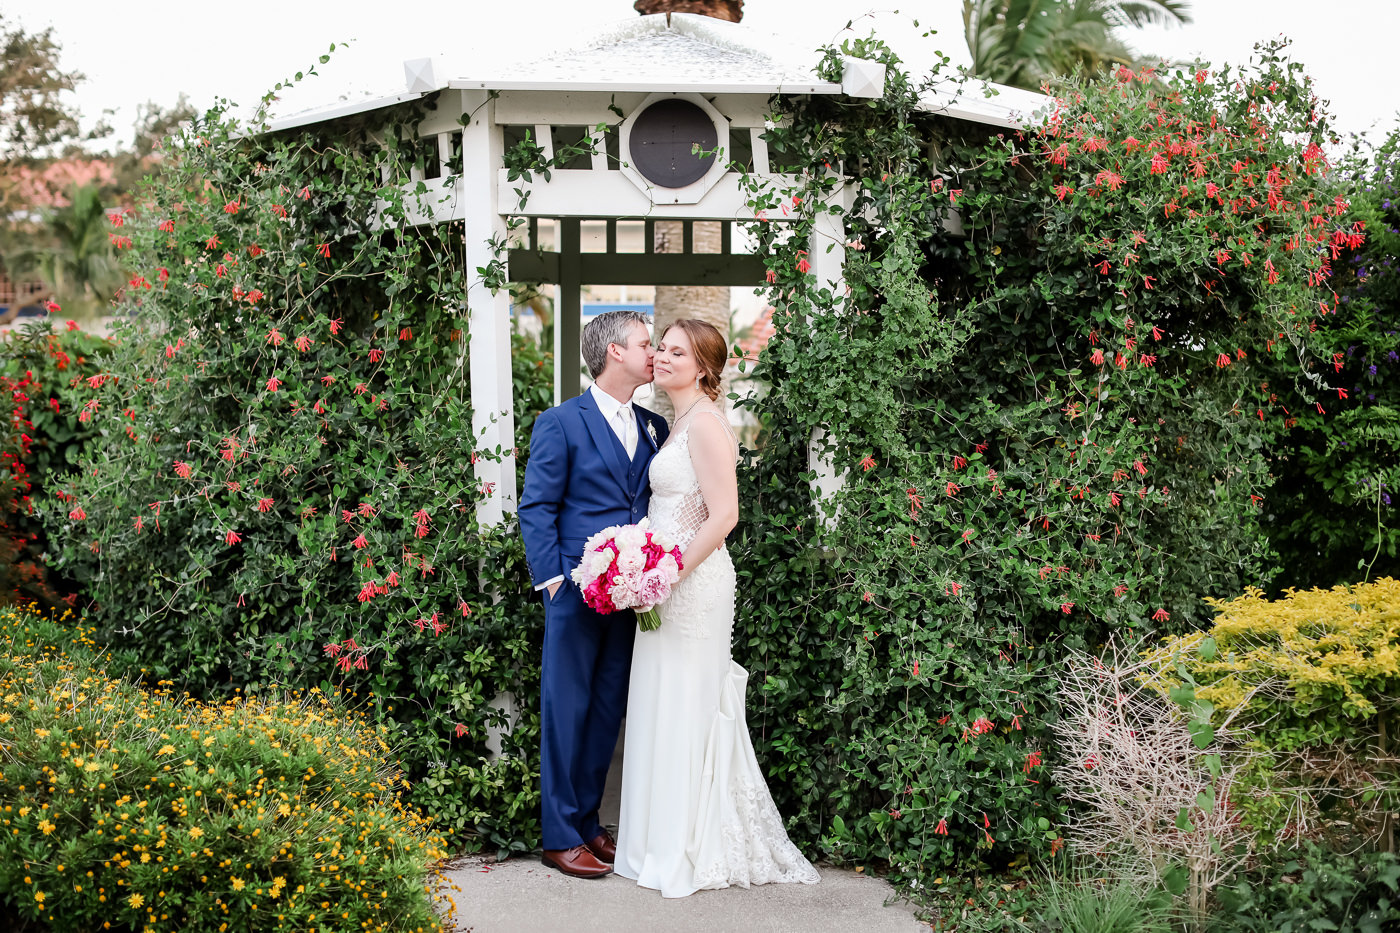 Romantic Bride and Groom Garden Wedding Portrait | Tampa Bay Wedding Photographer Lifelong Photography Studios | St. Pete Wedding Venue Isla Del Sol Yacht and Country Club